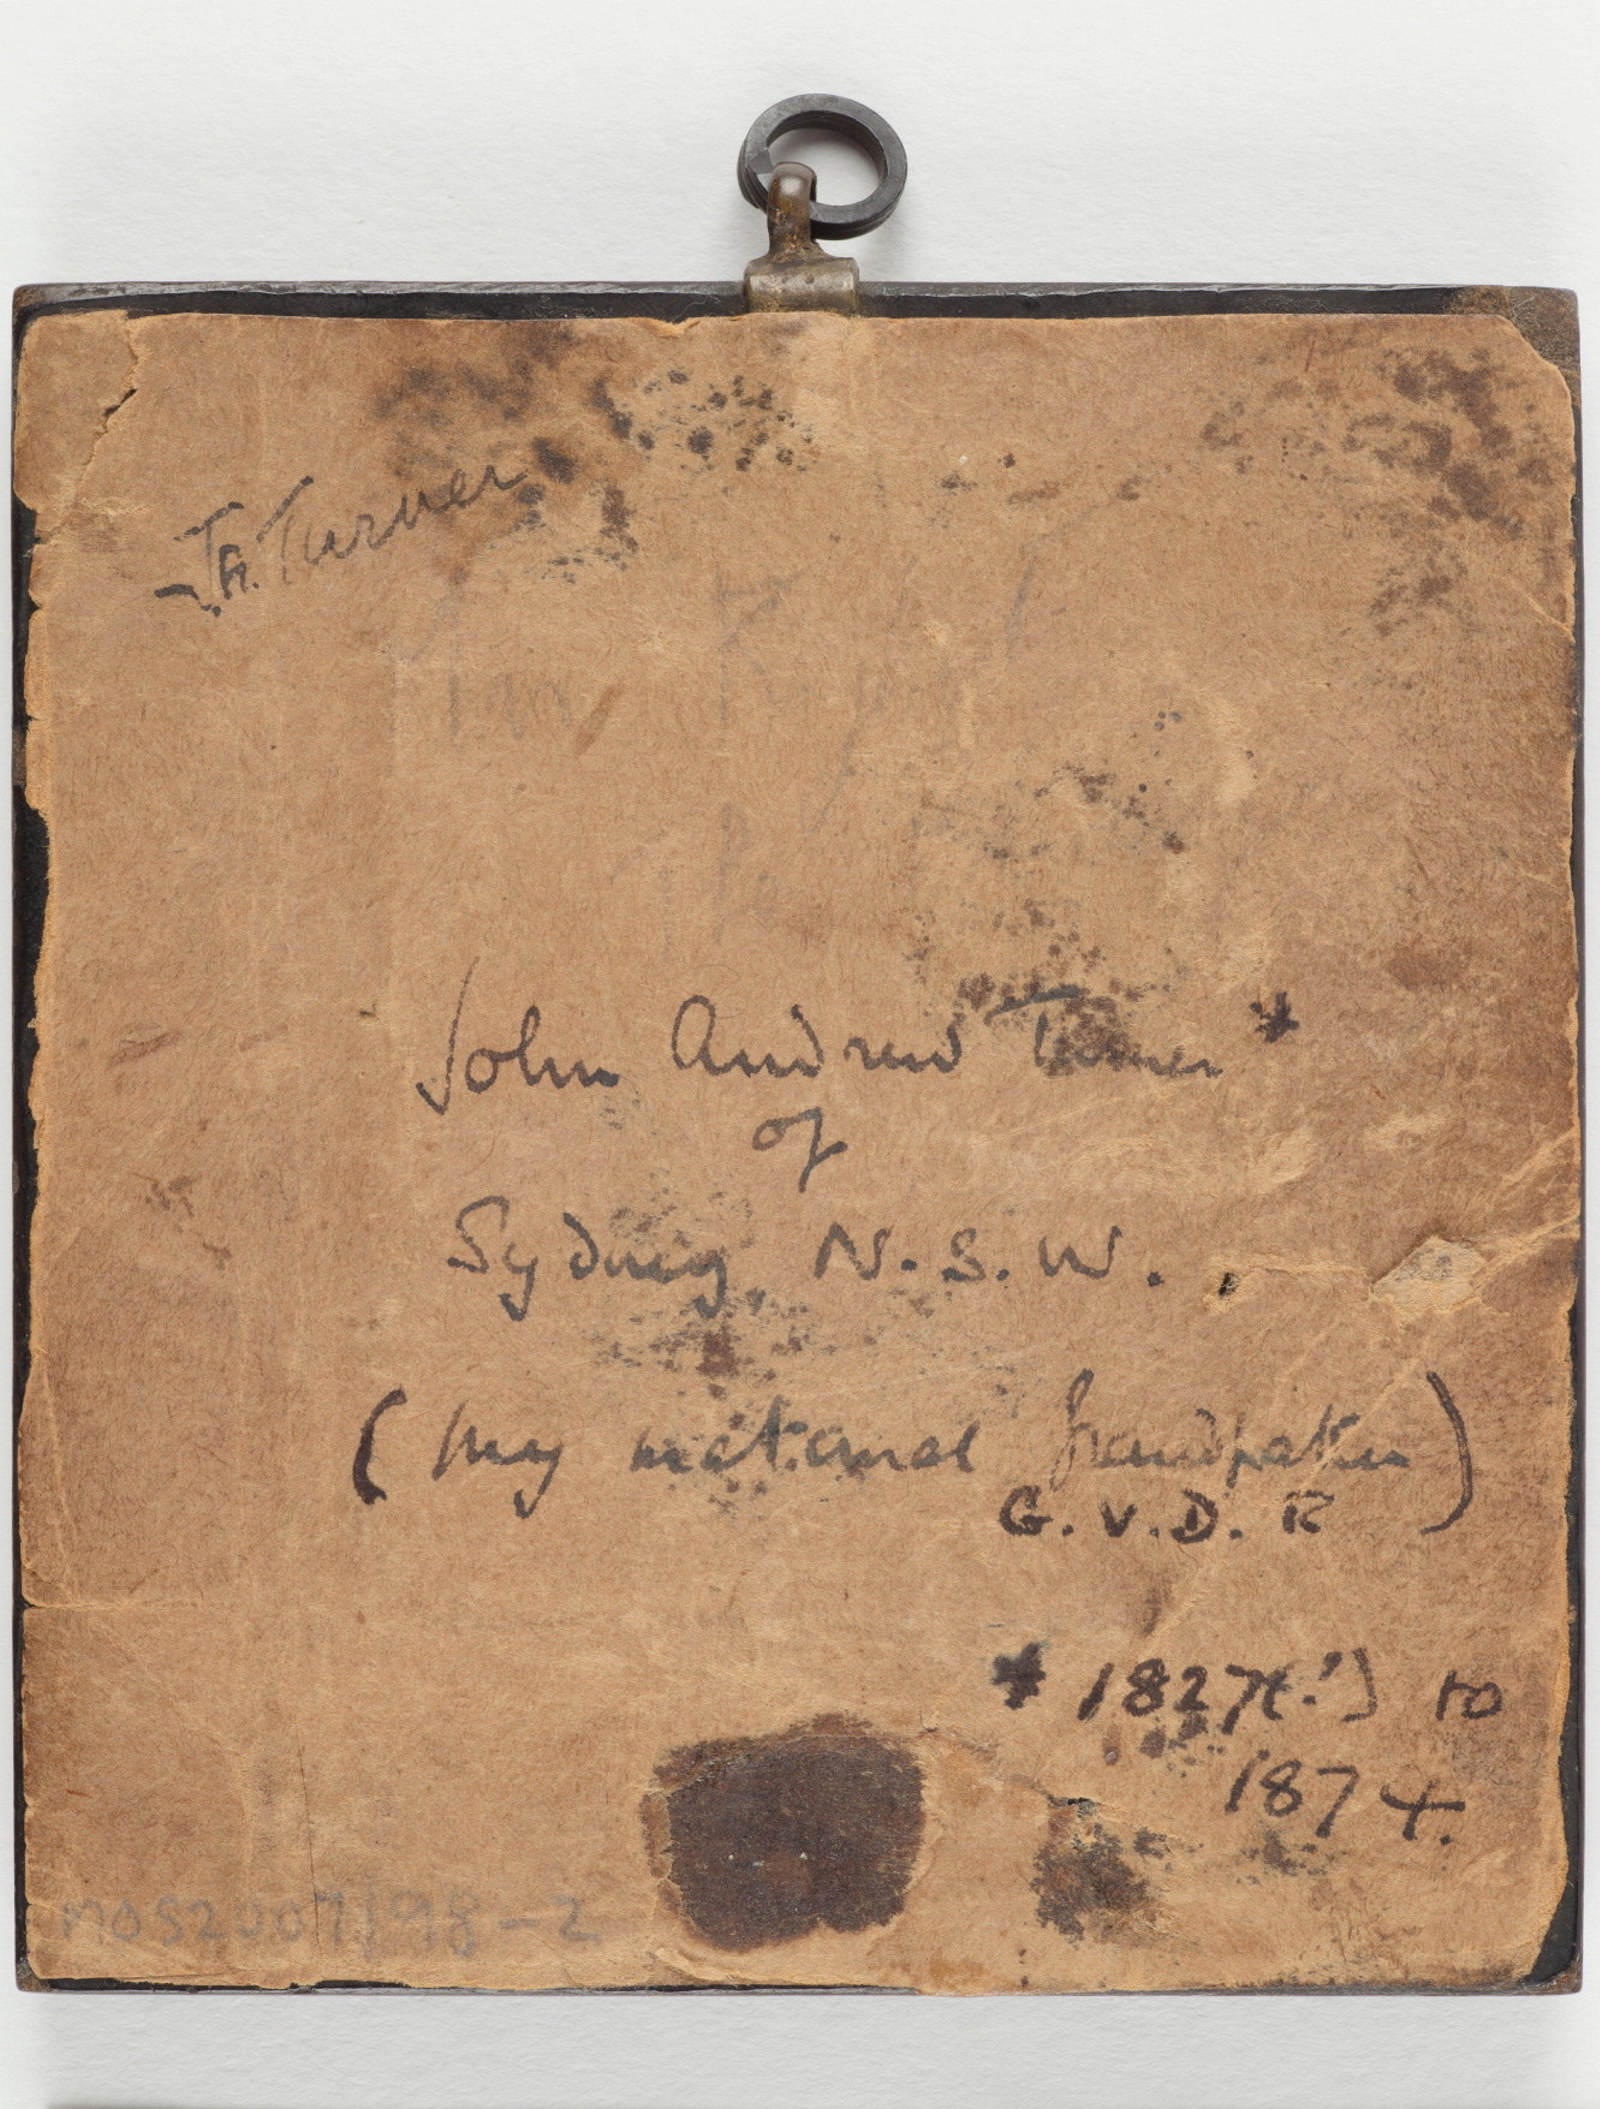 Ink inscription on backing paper of framed miniature: J A Turner / John Andrew Turner* / of / Sydney N.S.W. / (my maternal grandfather) / G.V.D.R. / *1827 (?) to / 1874.